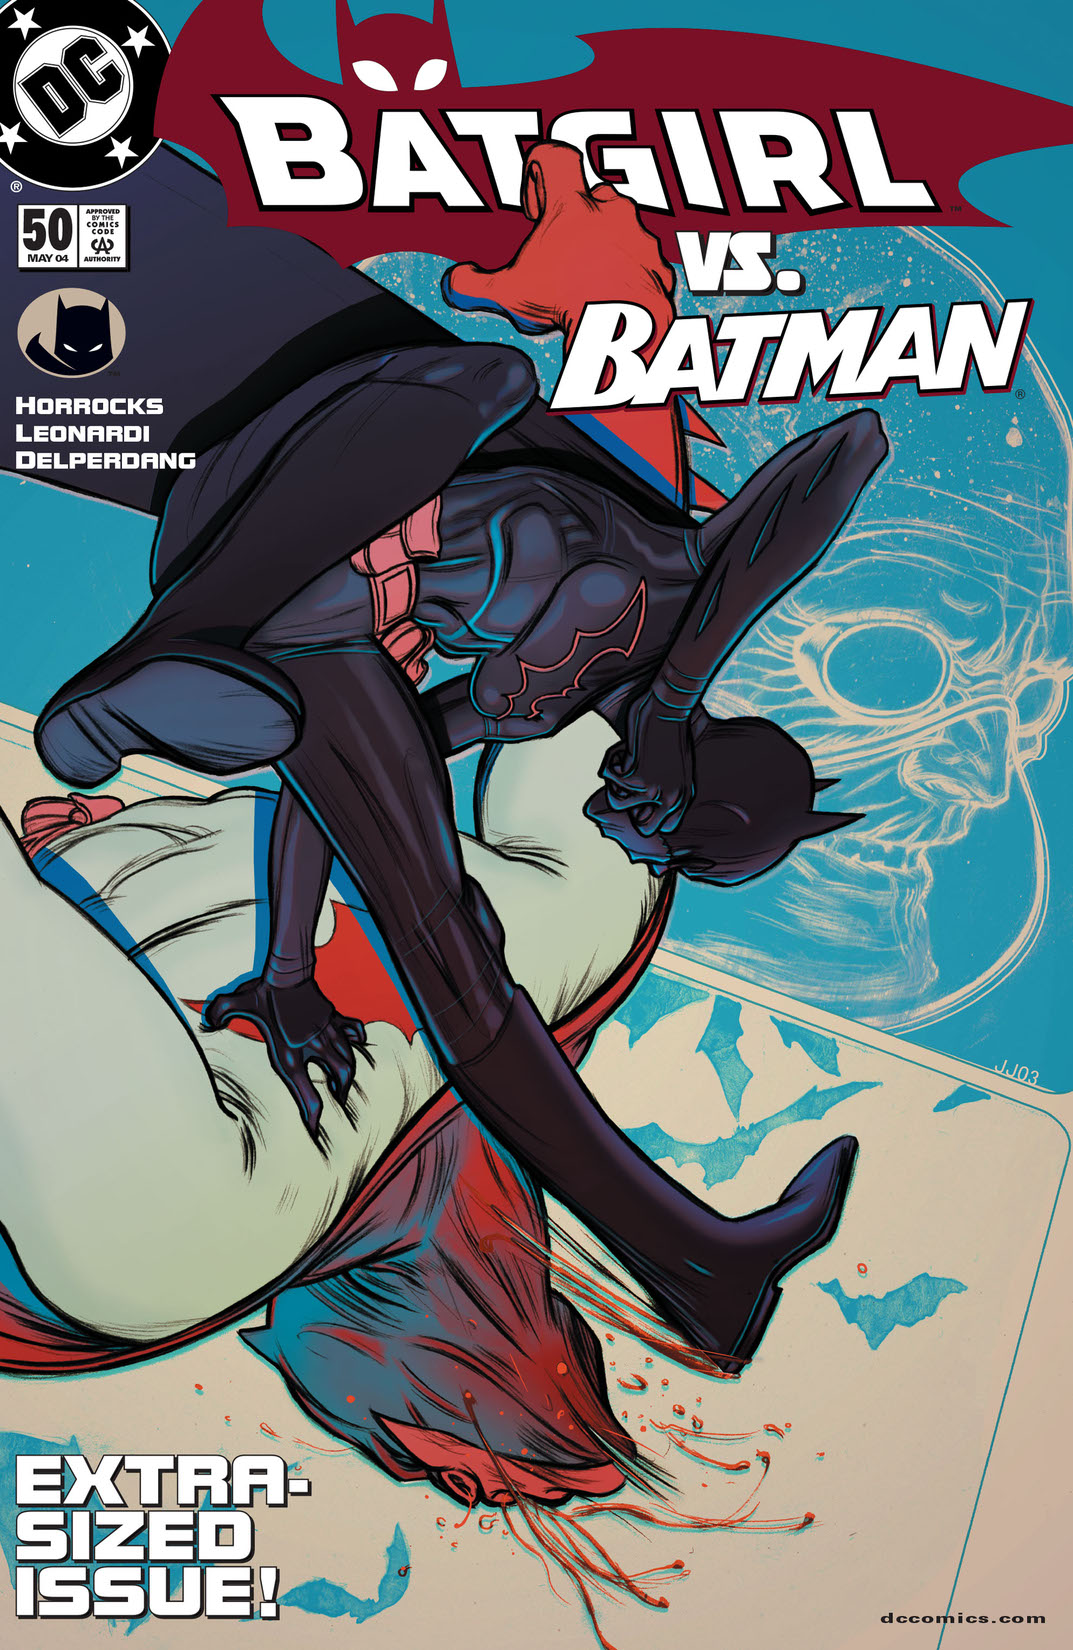 Batgirl (2000-) #50 preview images